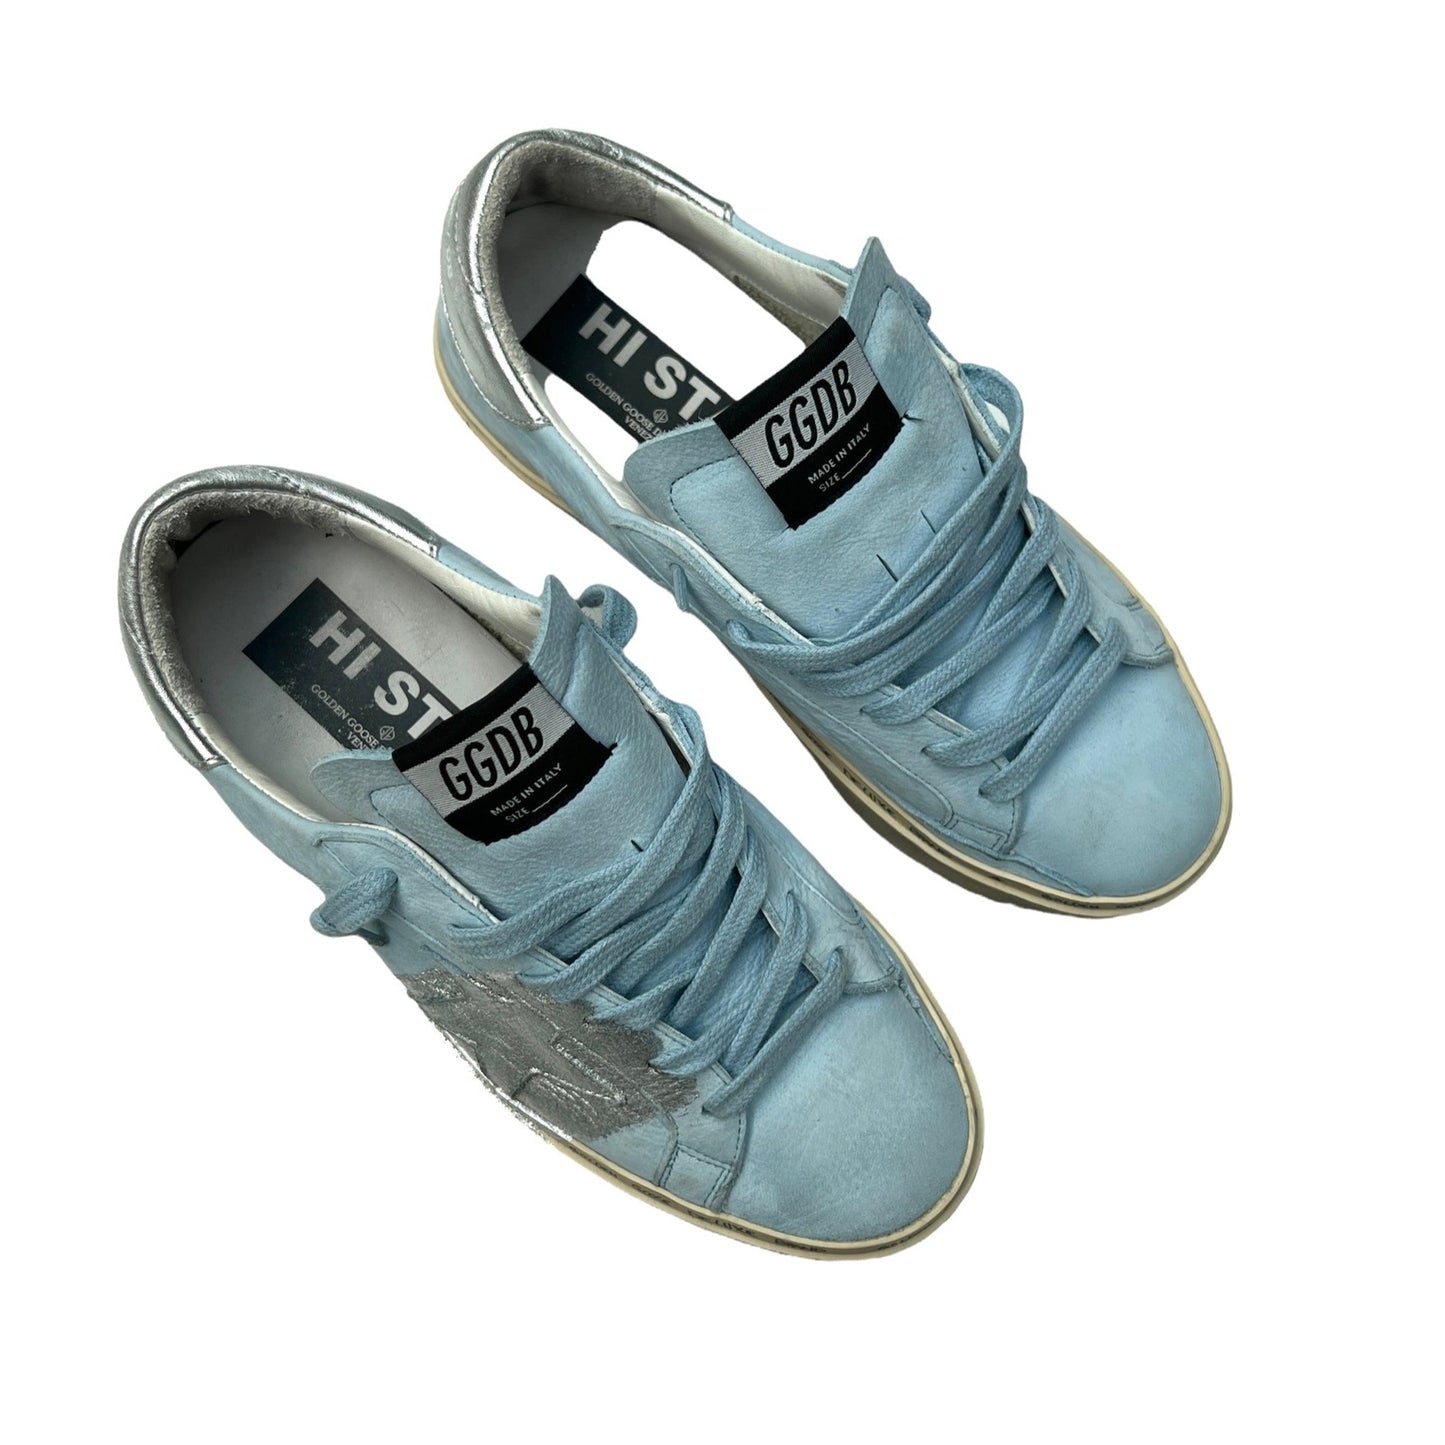 Blue Hi-Star Sneakers - 7